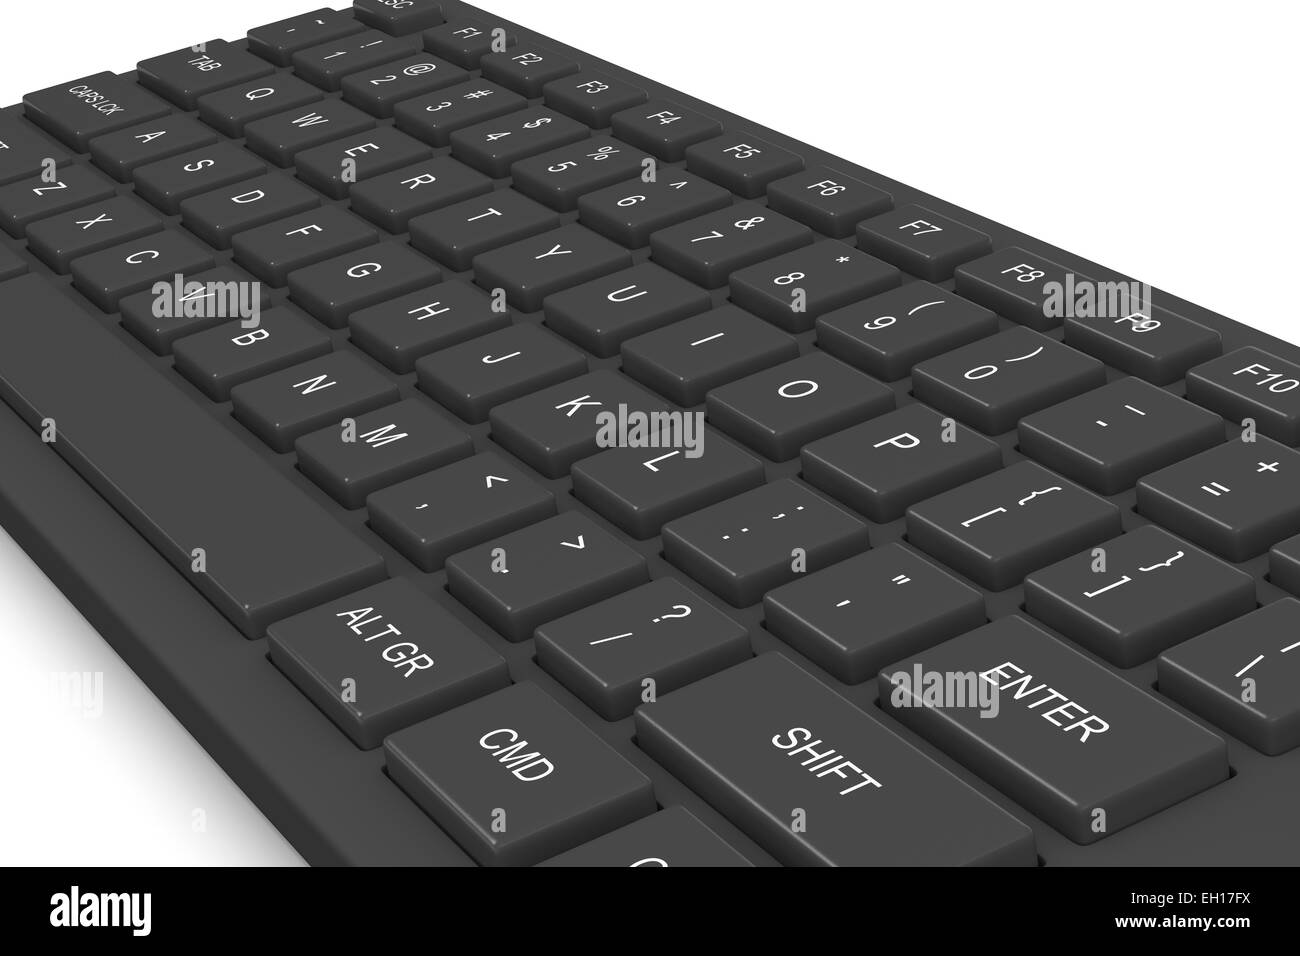 Black Computer Keyboard Isolated on White Background Stock Photo